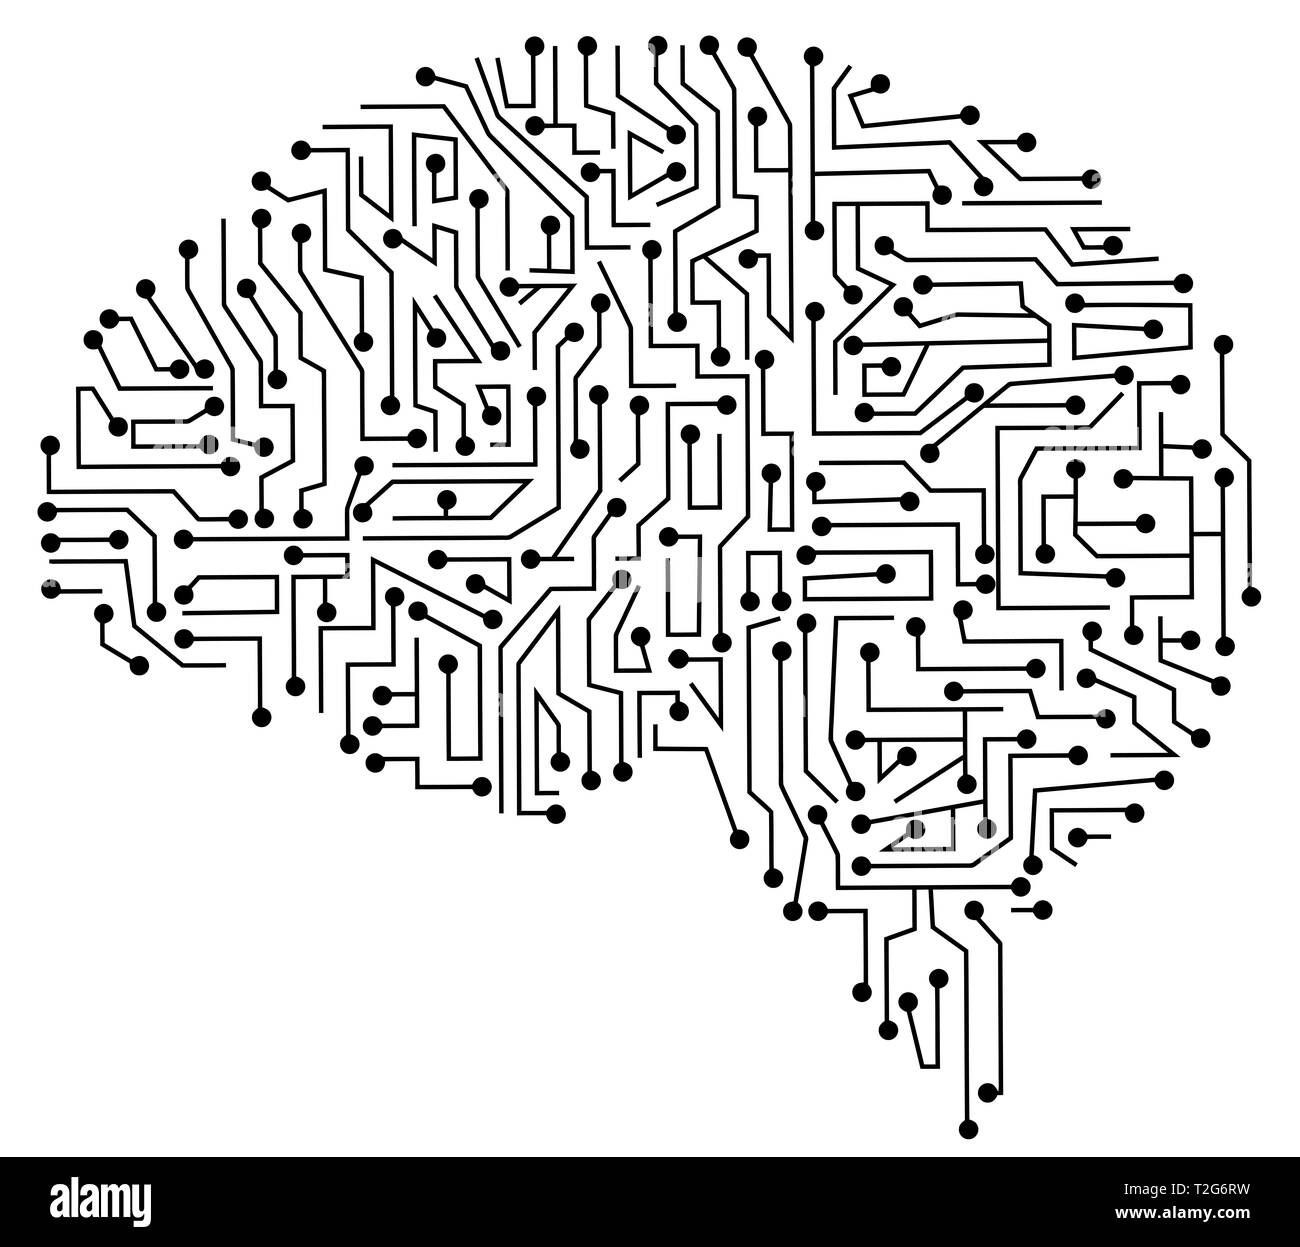 mind brain technology connection network illustration Stock Photo